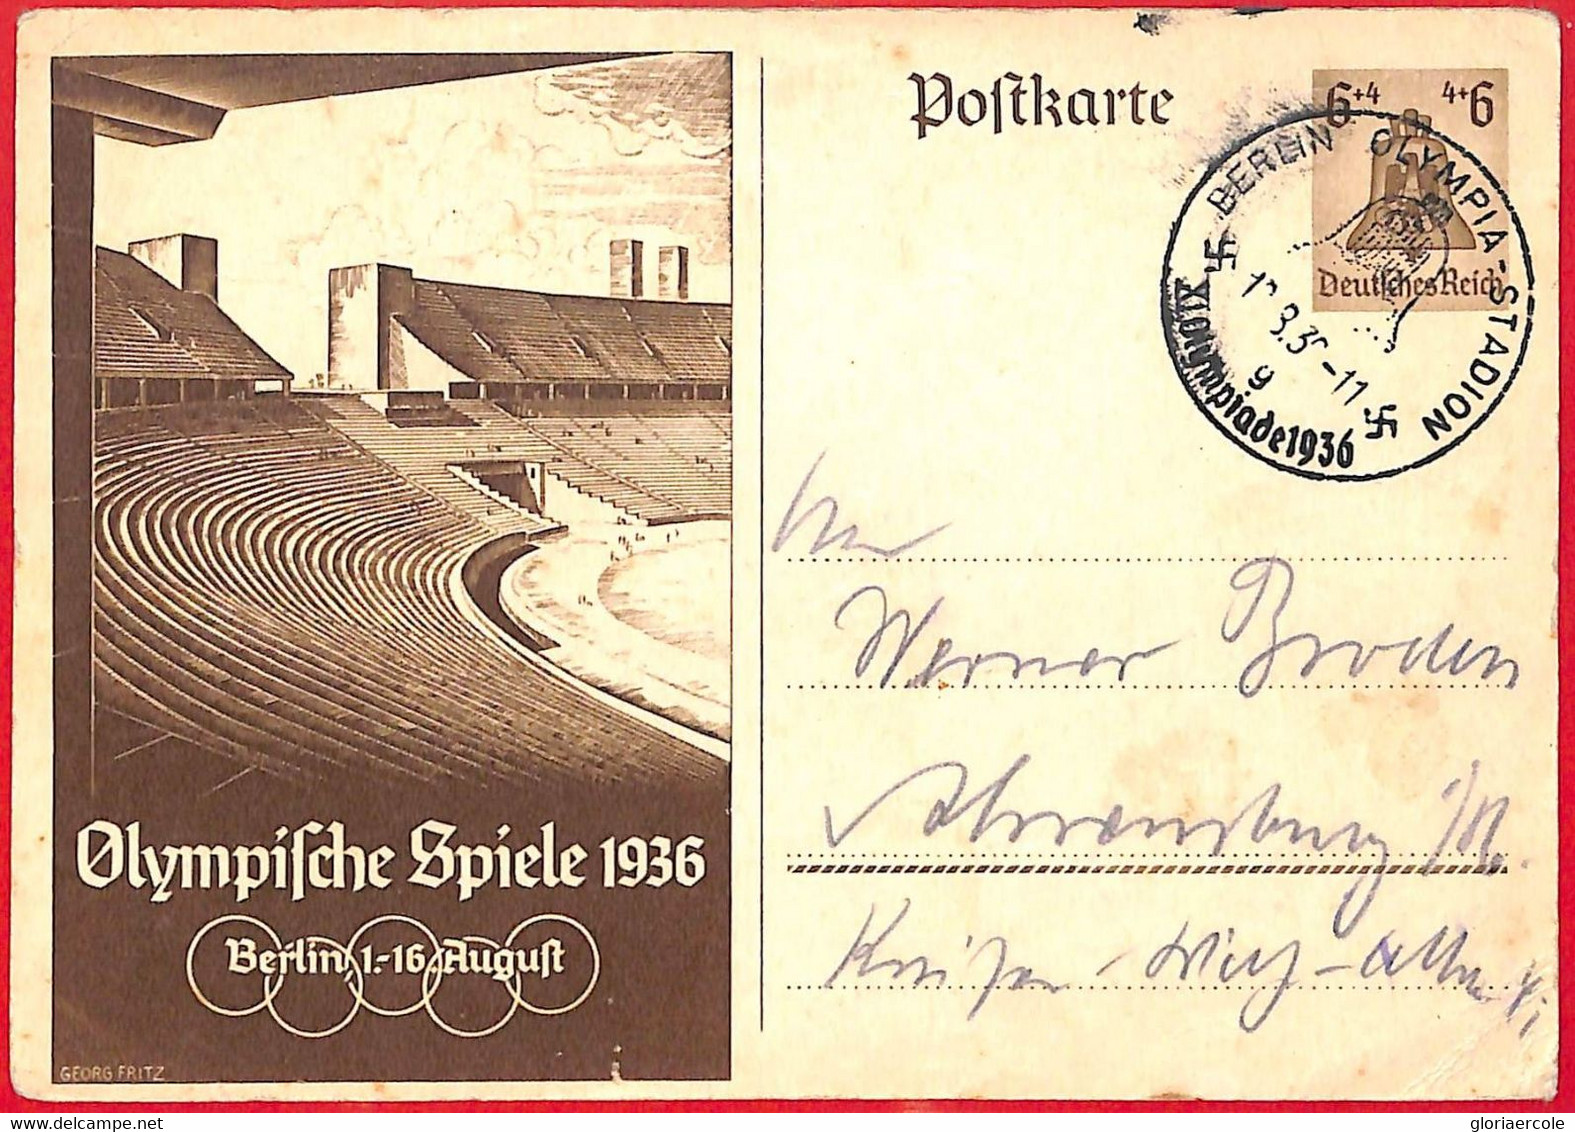 Aa2572 - Germany - POSTAL HISTORY - 1936 Olympic Games SPECIAL POSTMARK Stadium - Ete 1936: Berlin